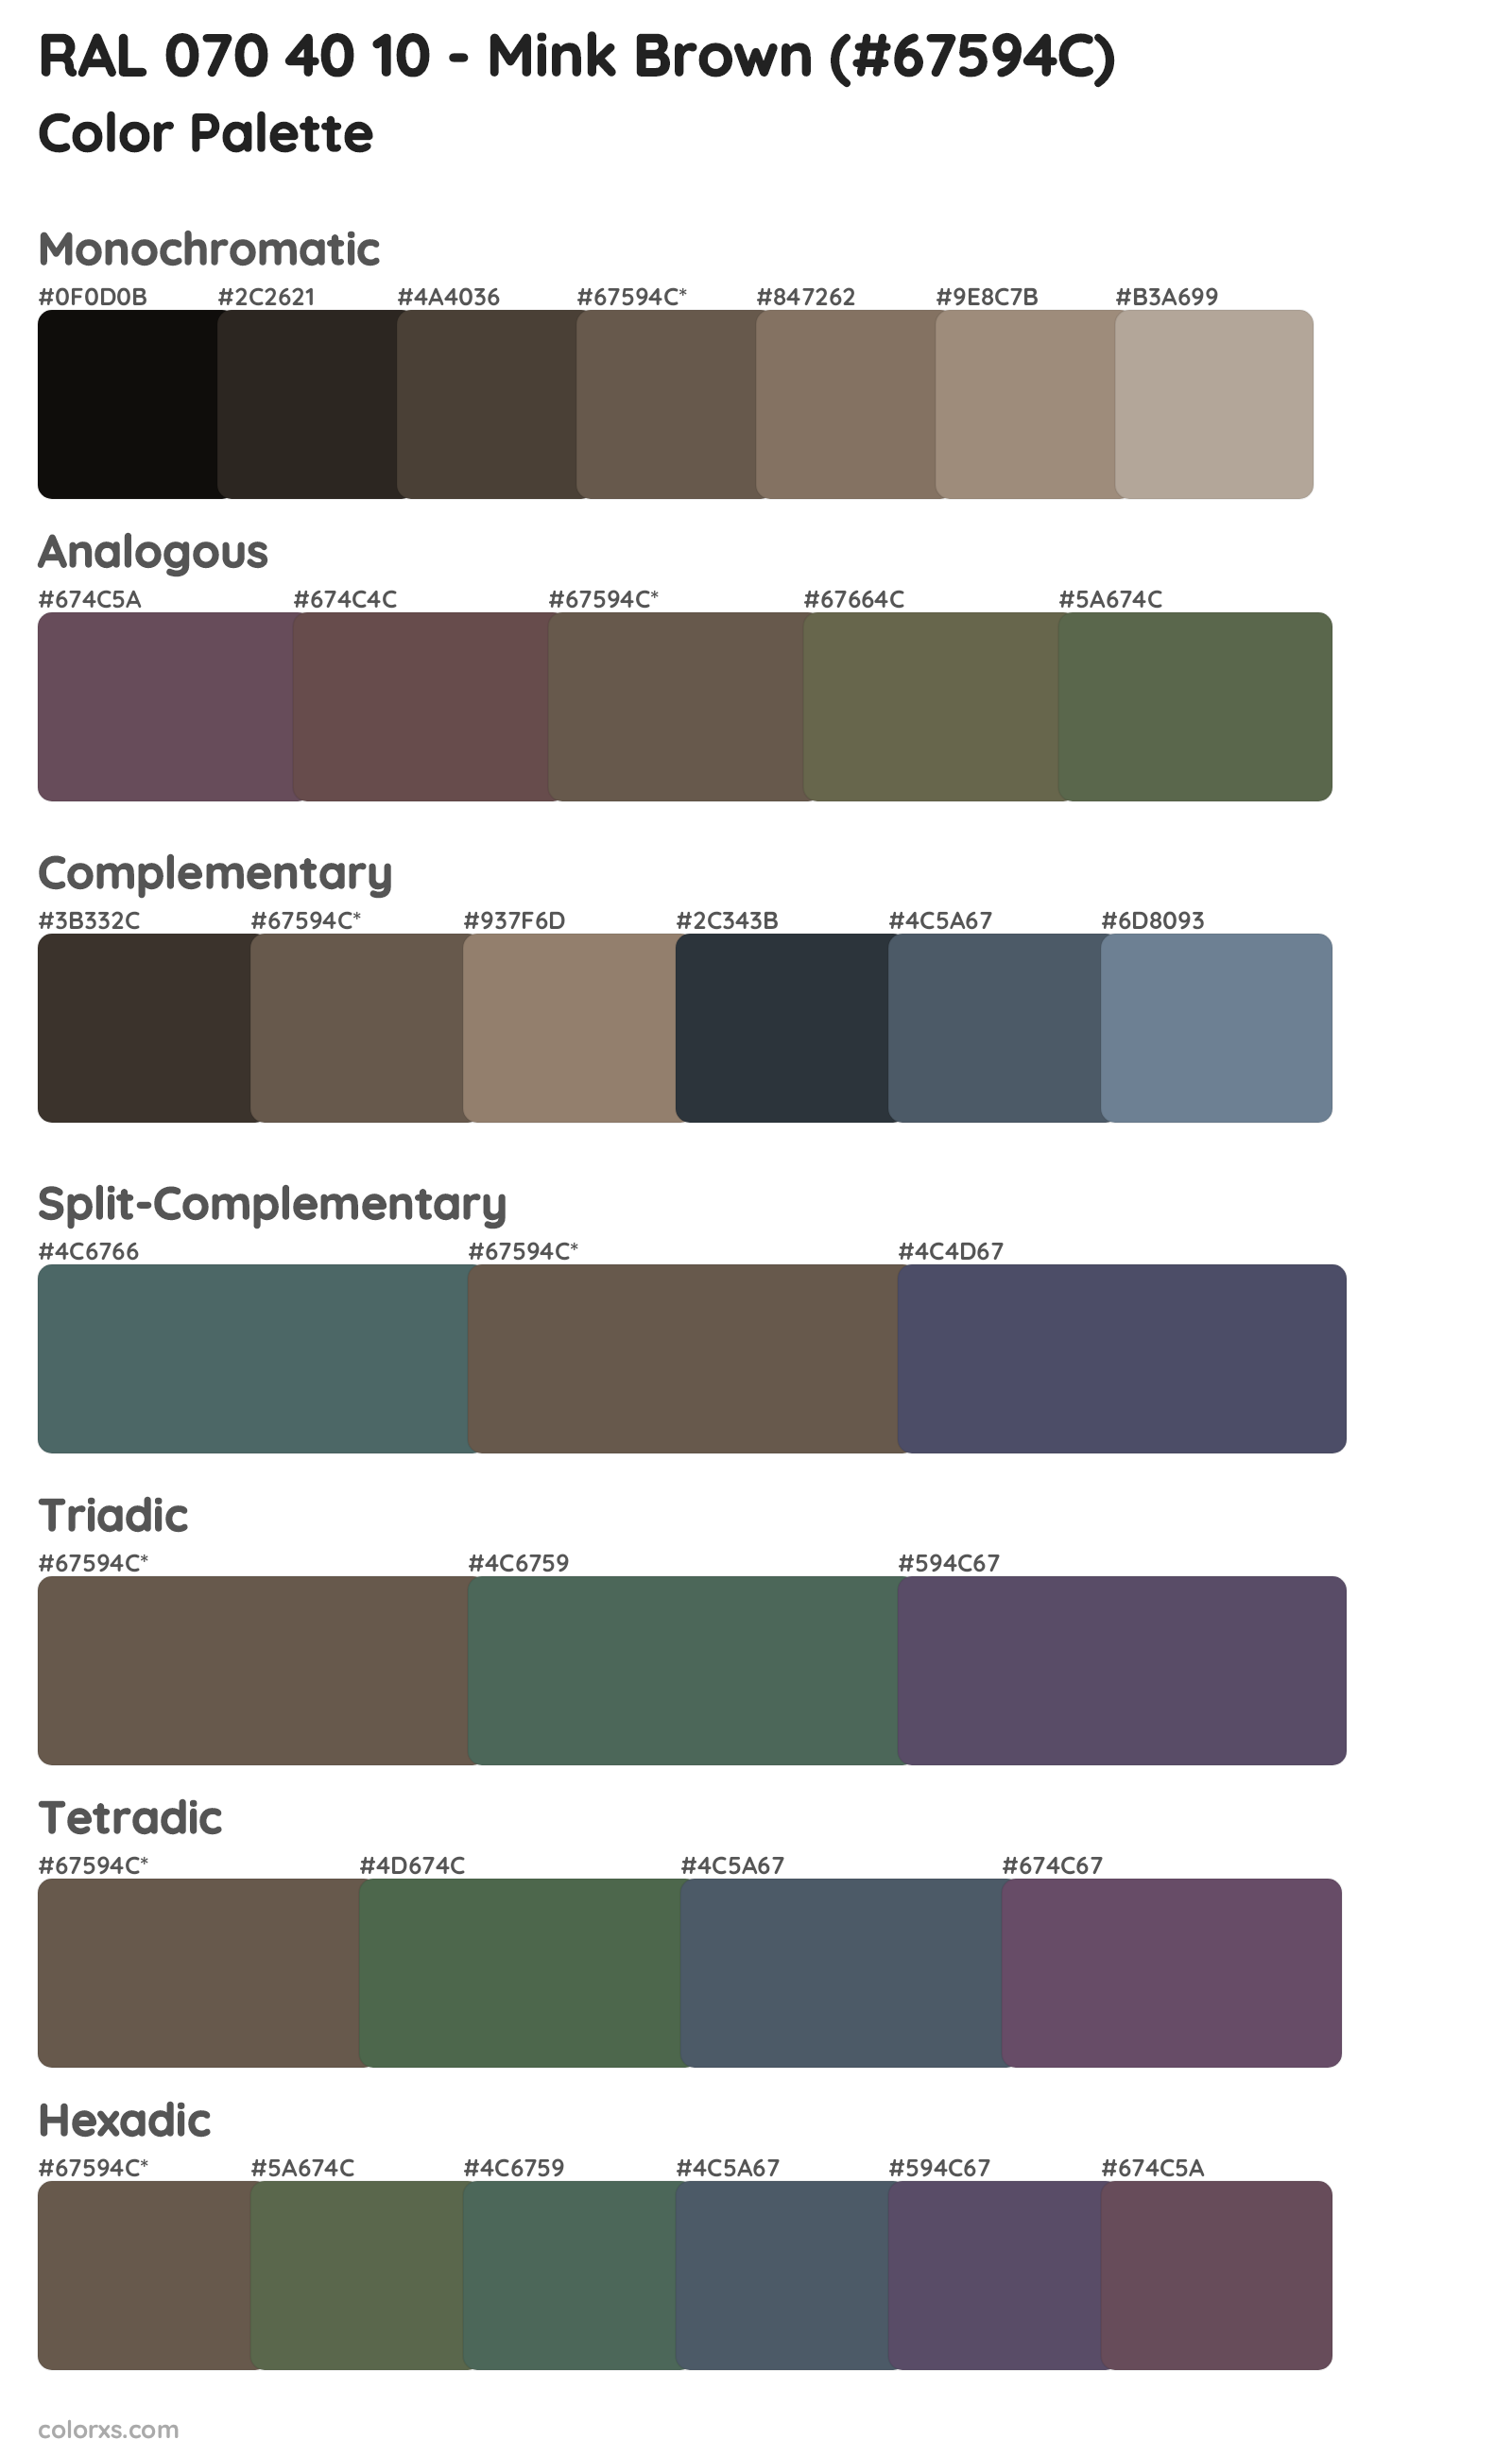 RAL 070 40 10 - Mink Brown Color Scheme Palettes